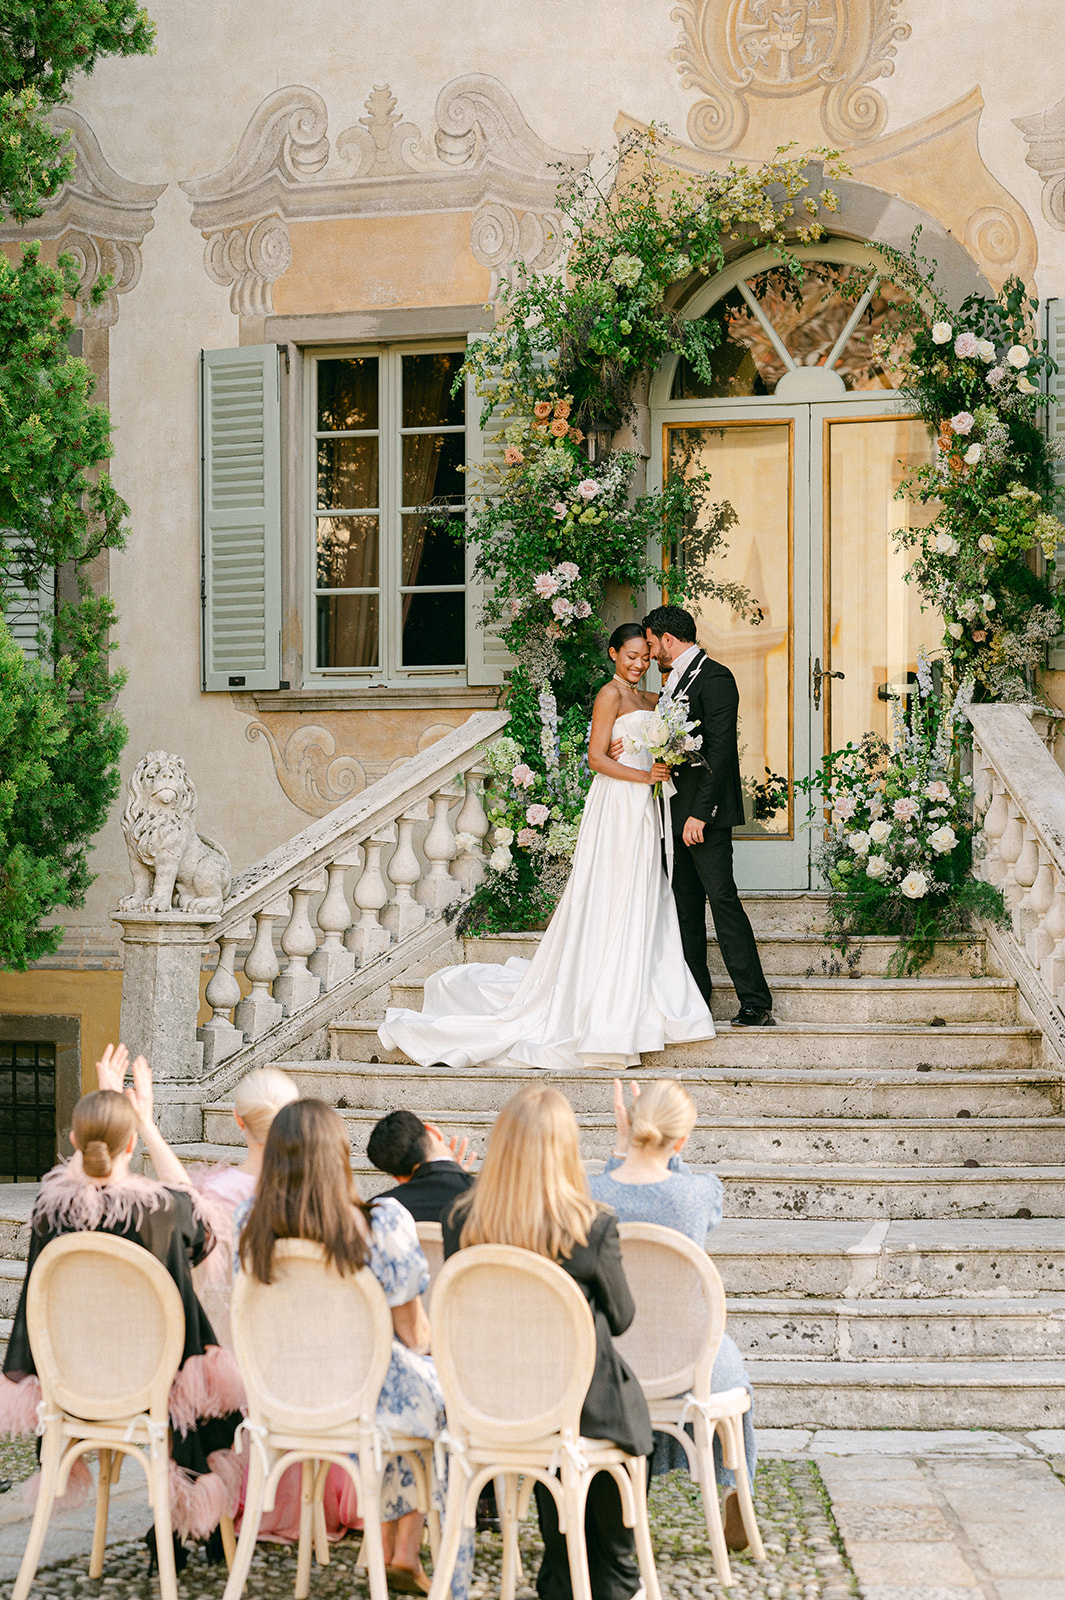 Romantic garden destination wedding ceremony at Villa Canton in Bergamo, Italy.